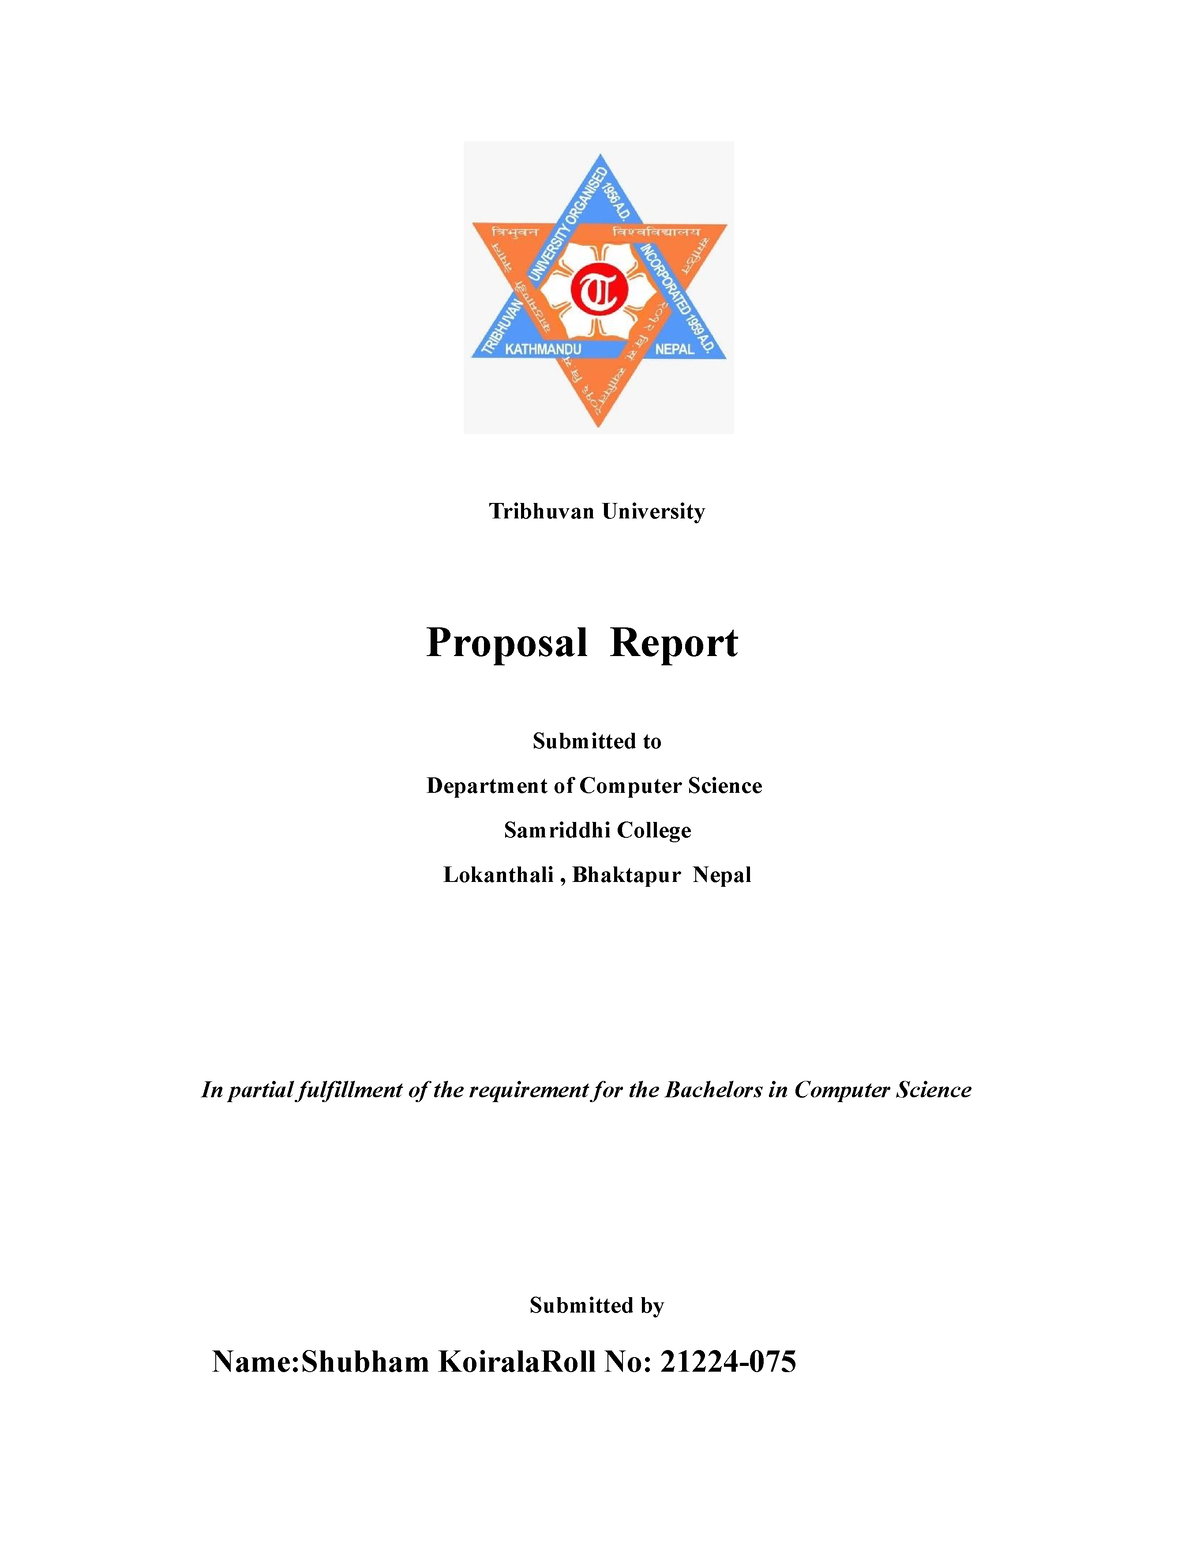 thesis proposal sample of tribhuvan university